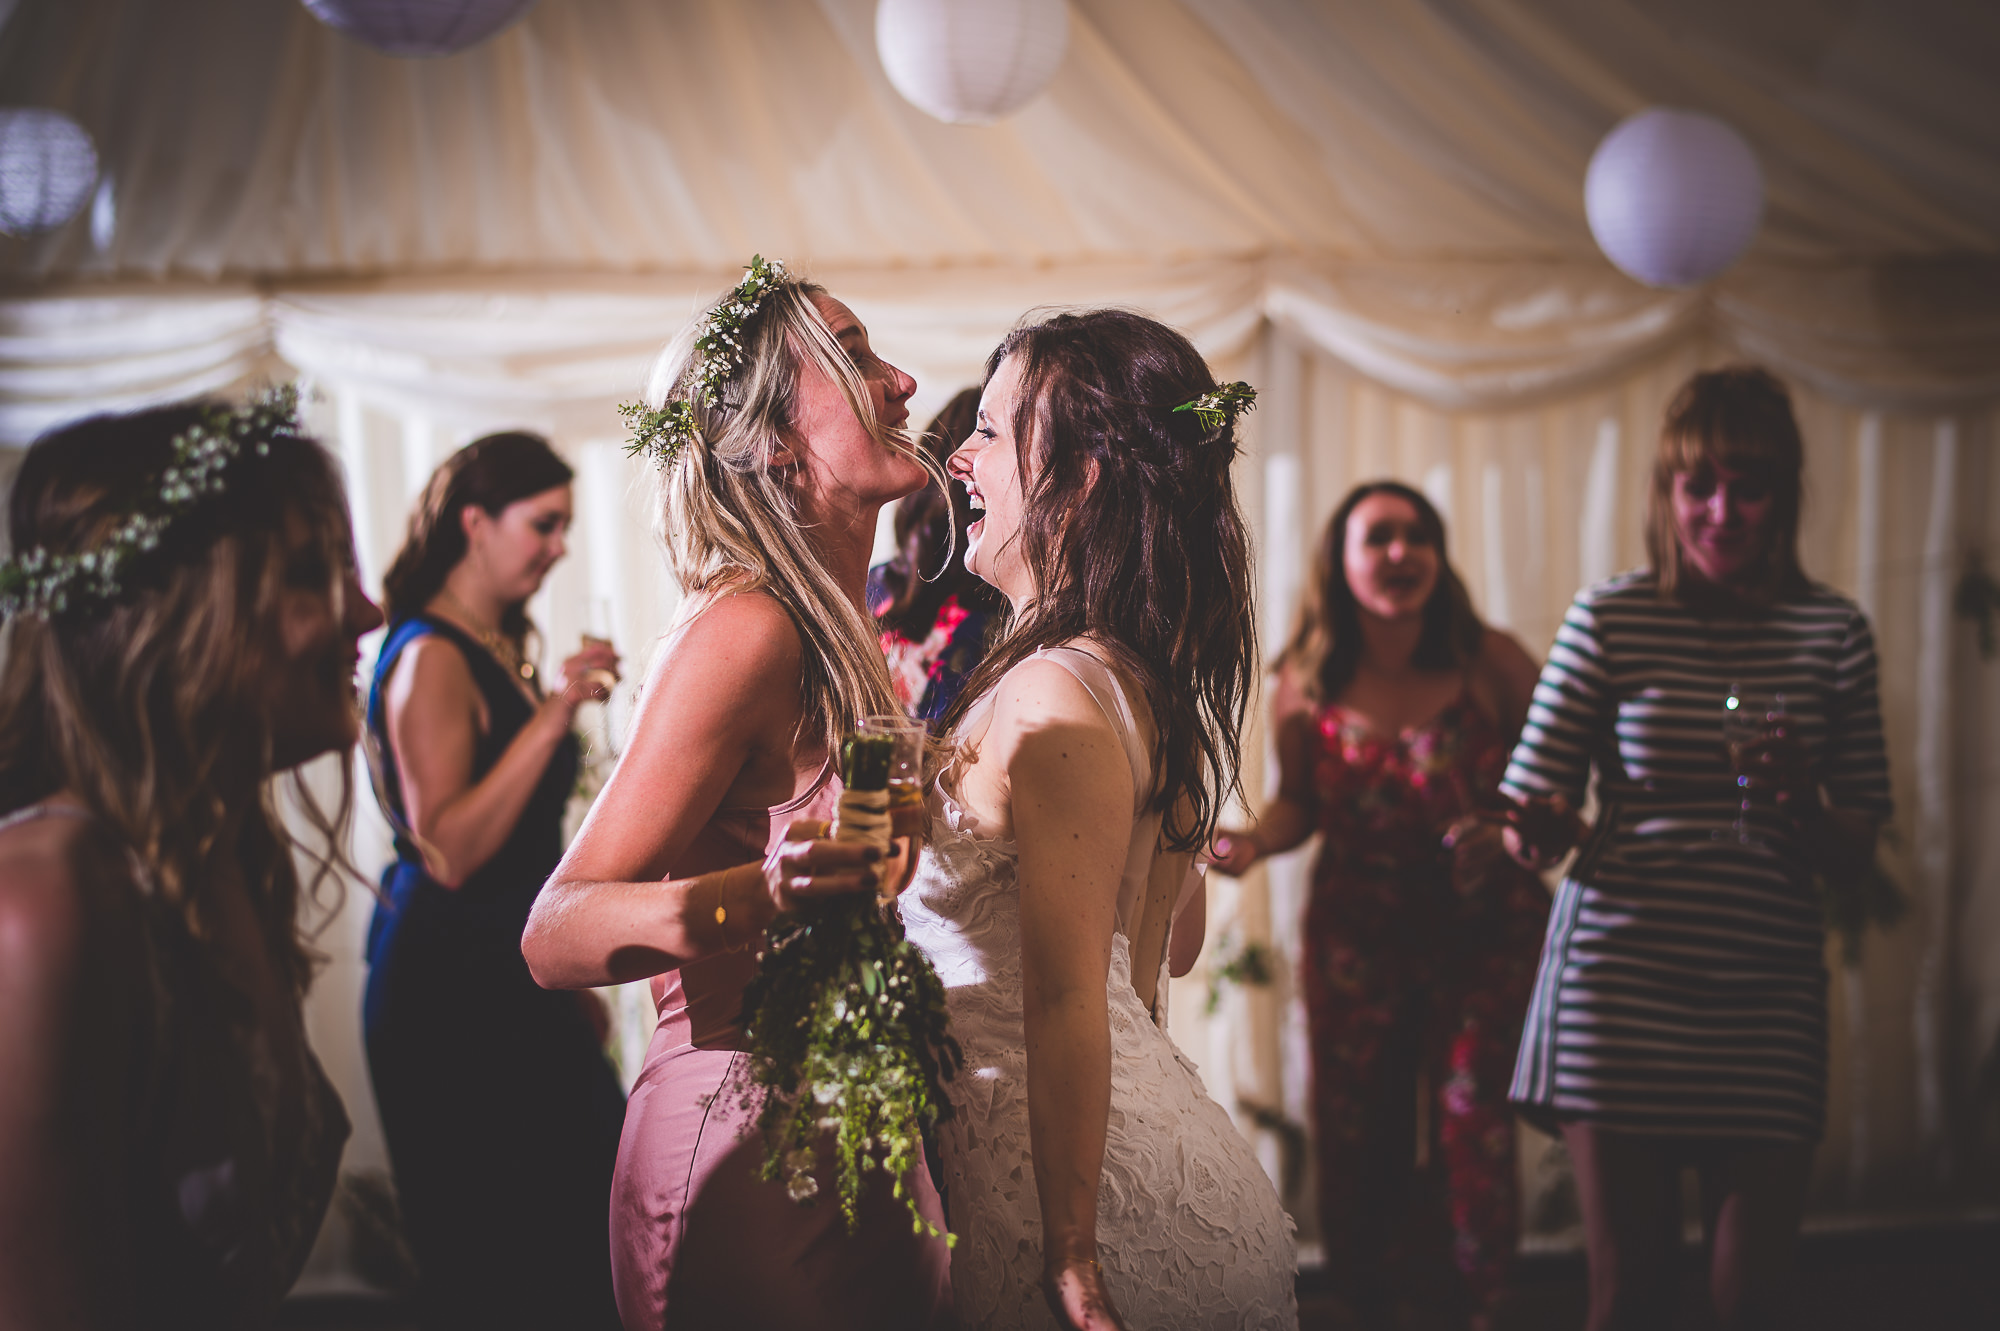 Wedding photographer captures two brides hugging on the dance floor in a heartwarming wedding photo.